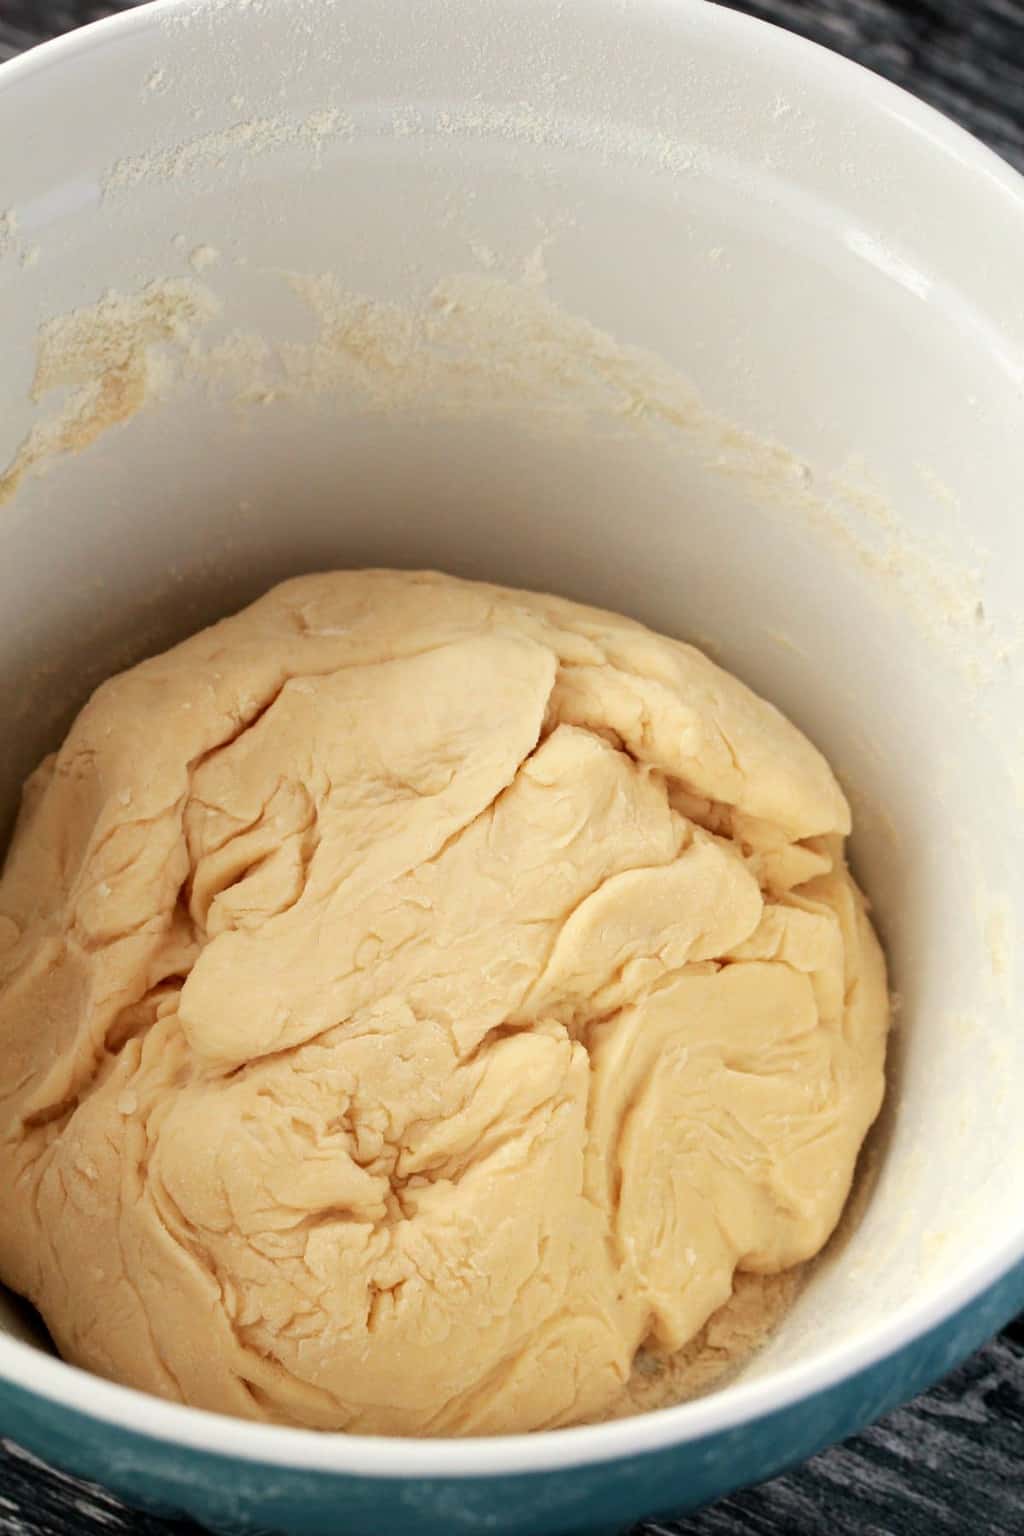 A ball of risen dough in a mixing bowl